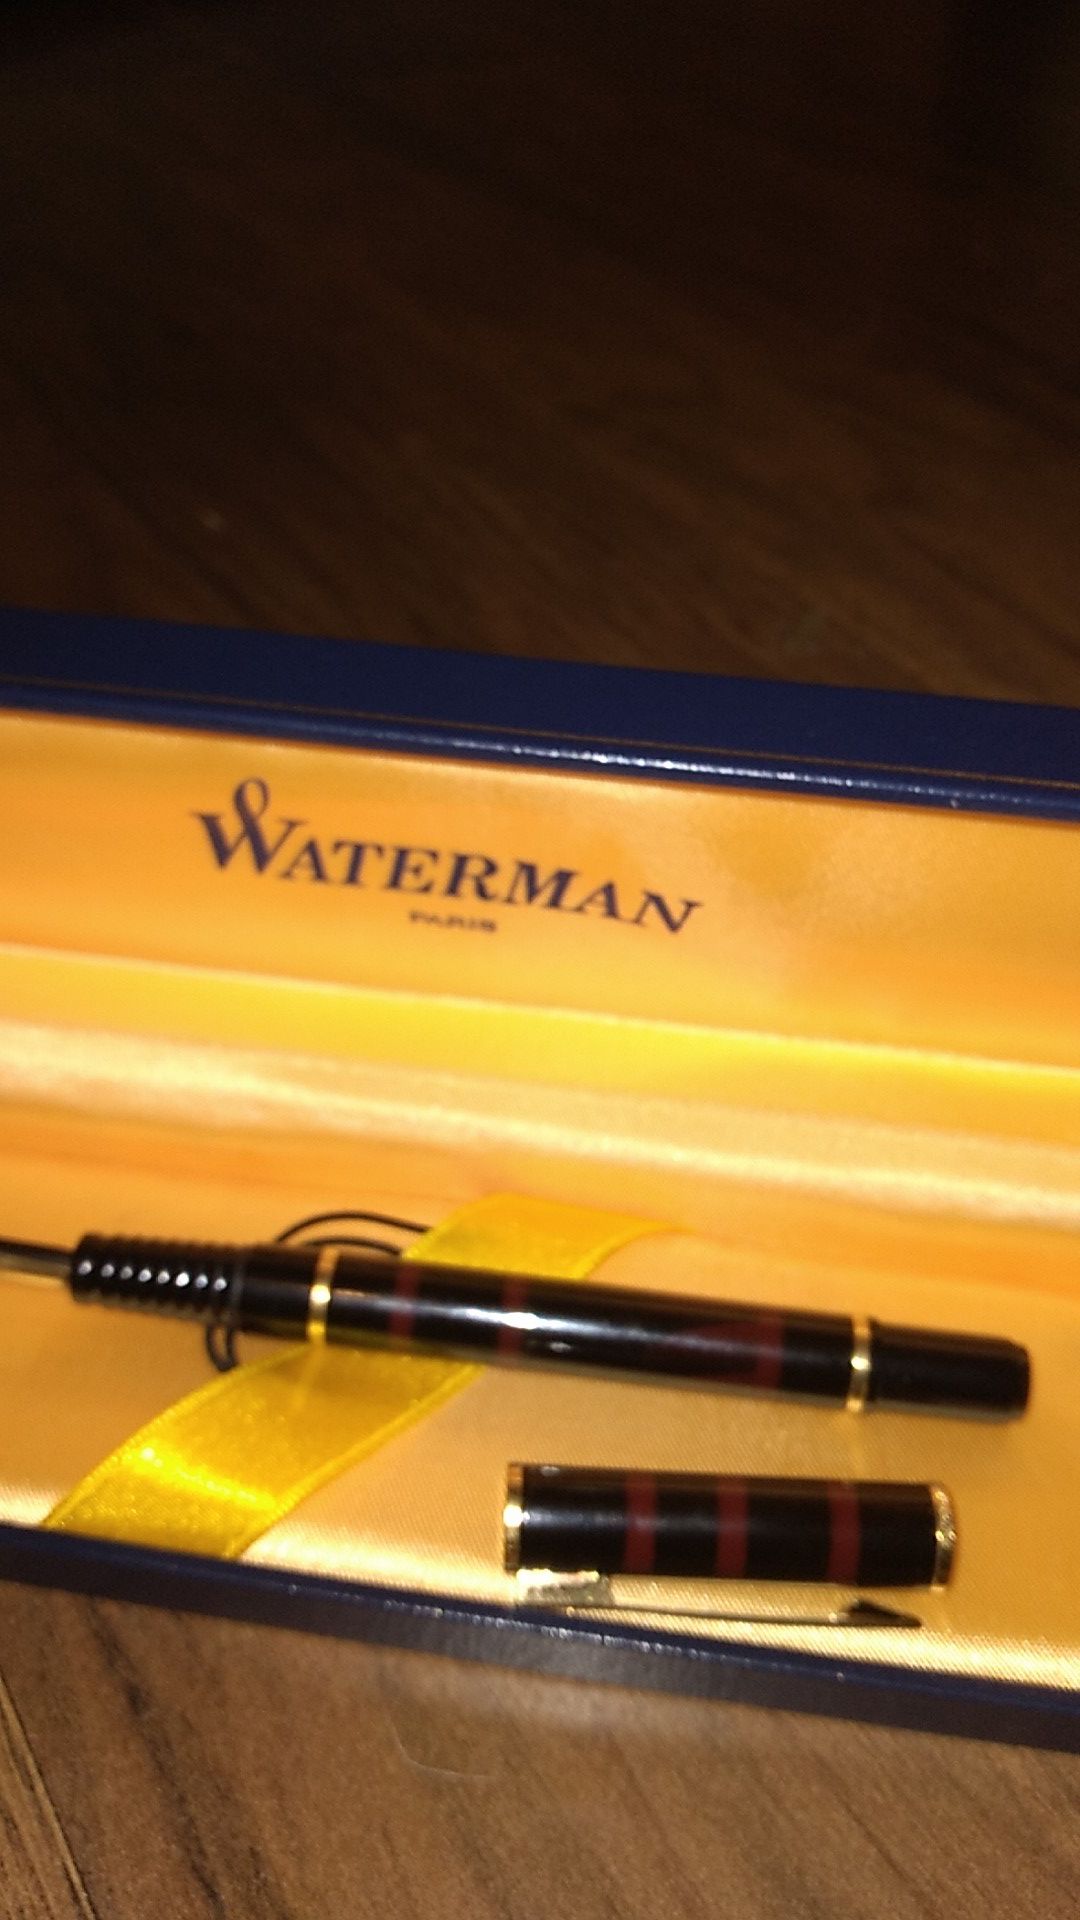 Waterman Paris fountain pen